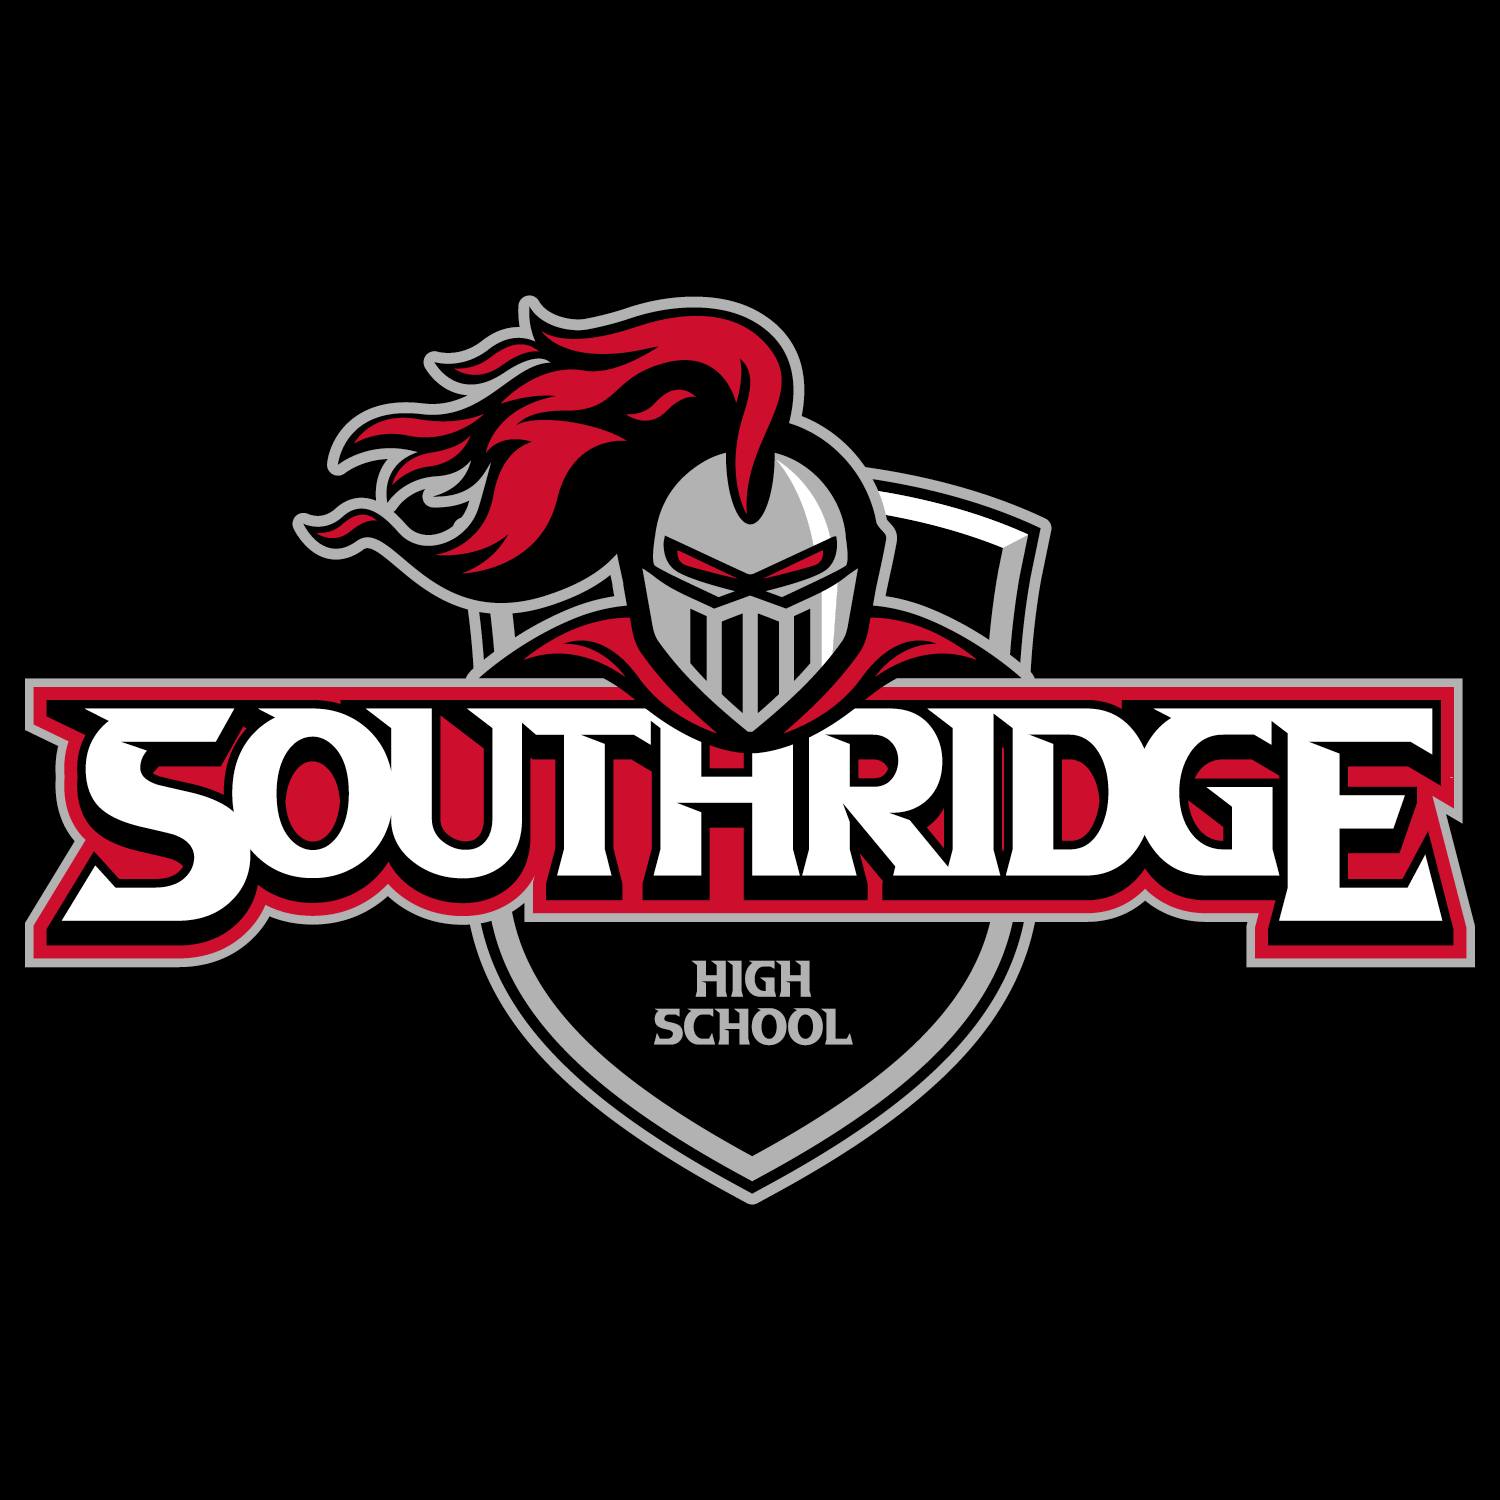 Southridge High School